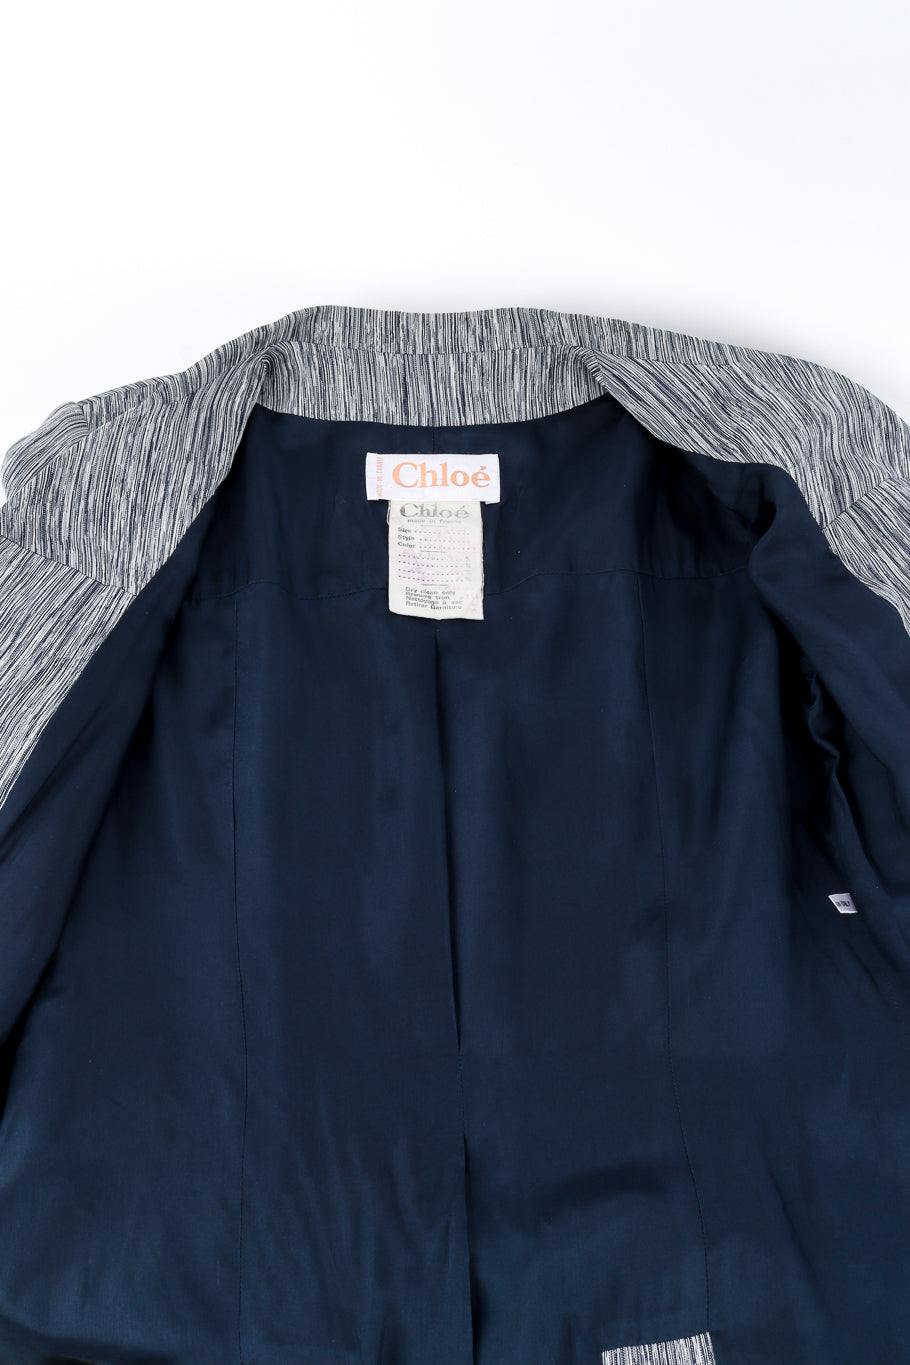 Chloé Woodgrain Stripe Jacket & Pant Set view of jacket lining @recess la